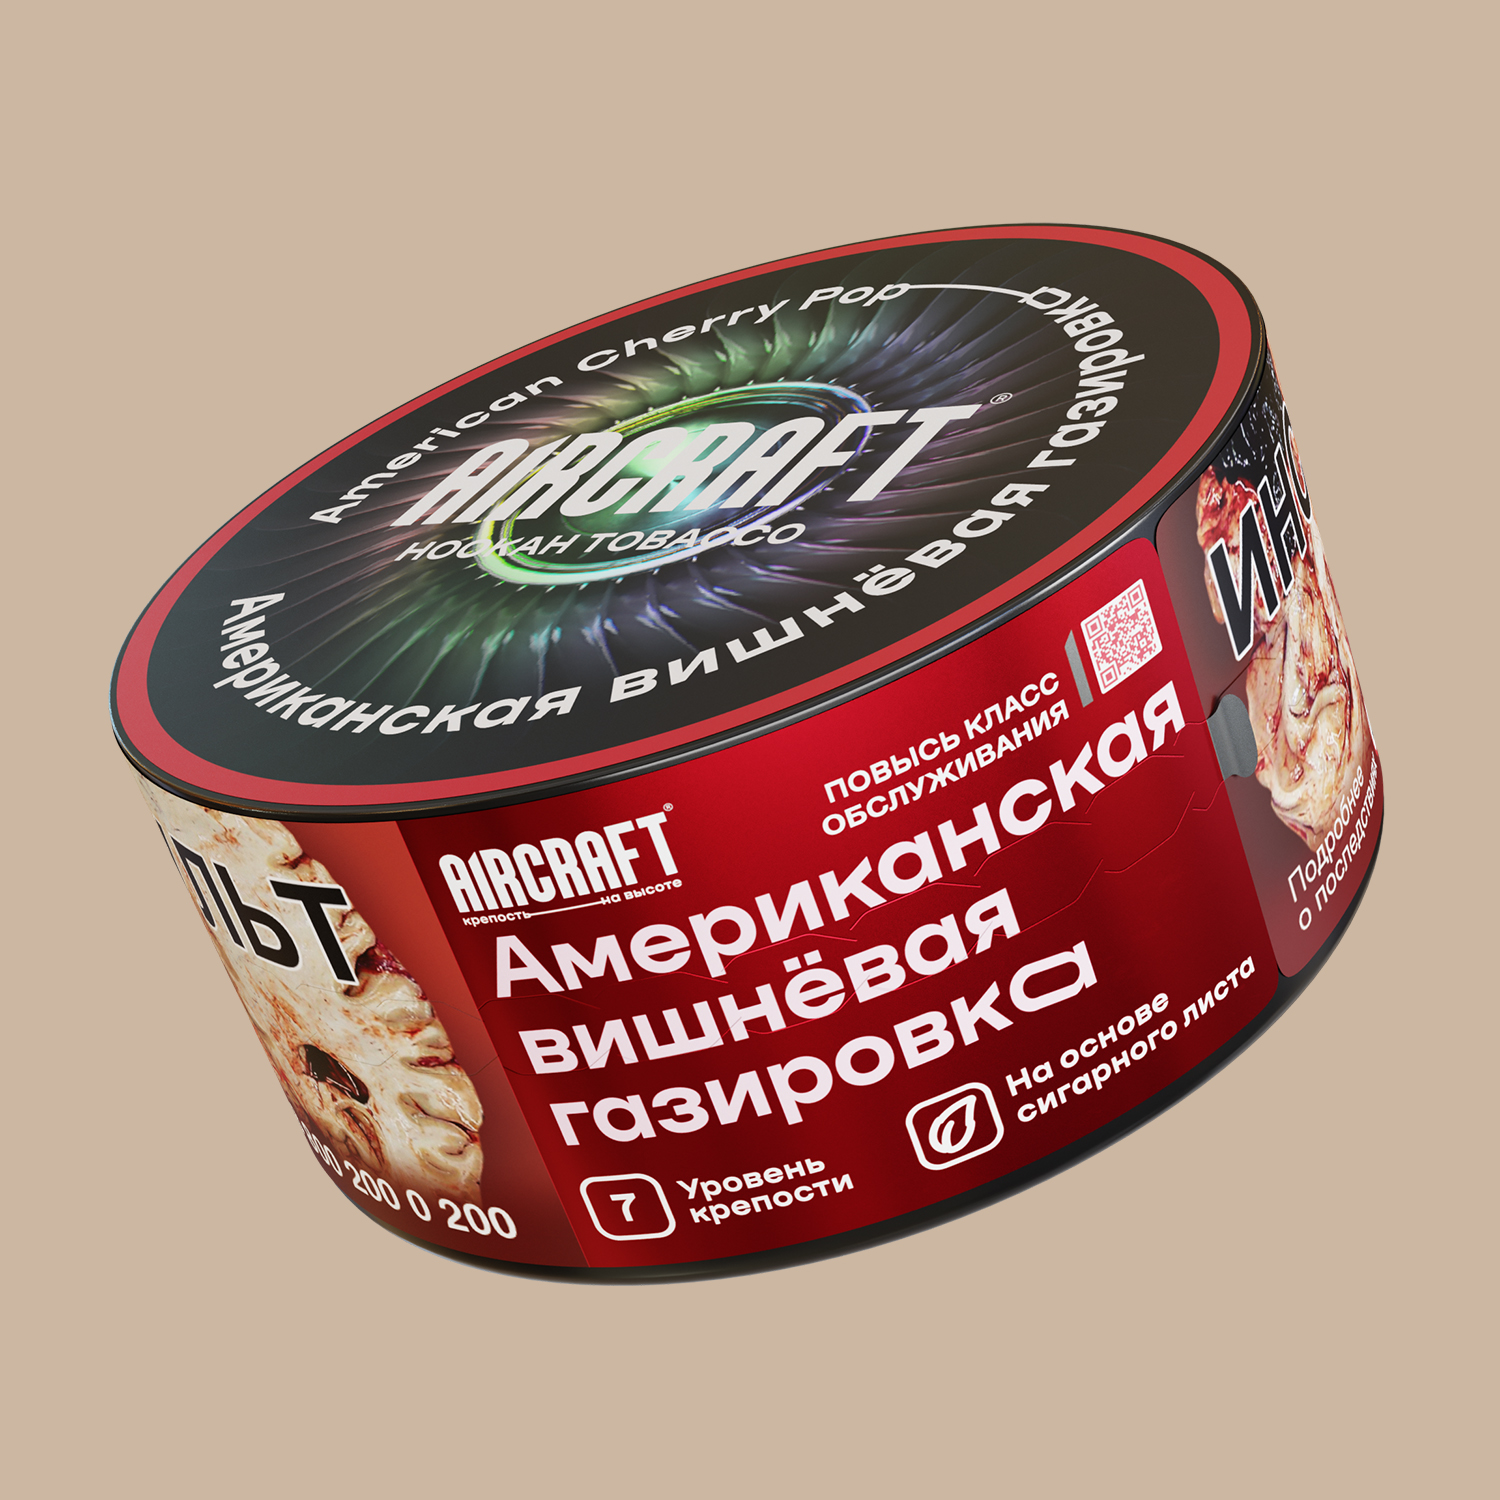 Табак для кальяна “Аиркрафт”, аромат  Американская вишневая газировка, 25 гр.